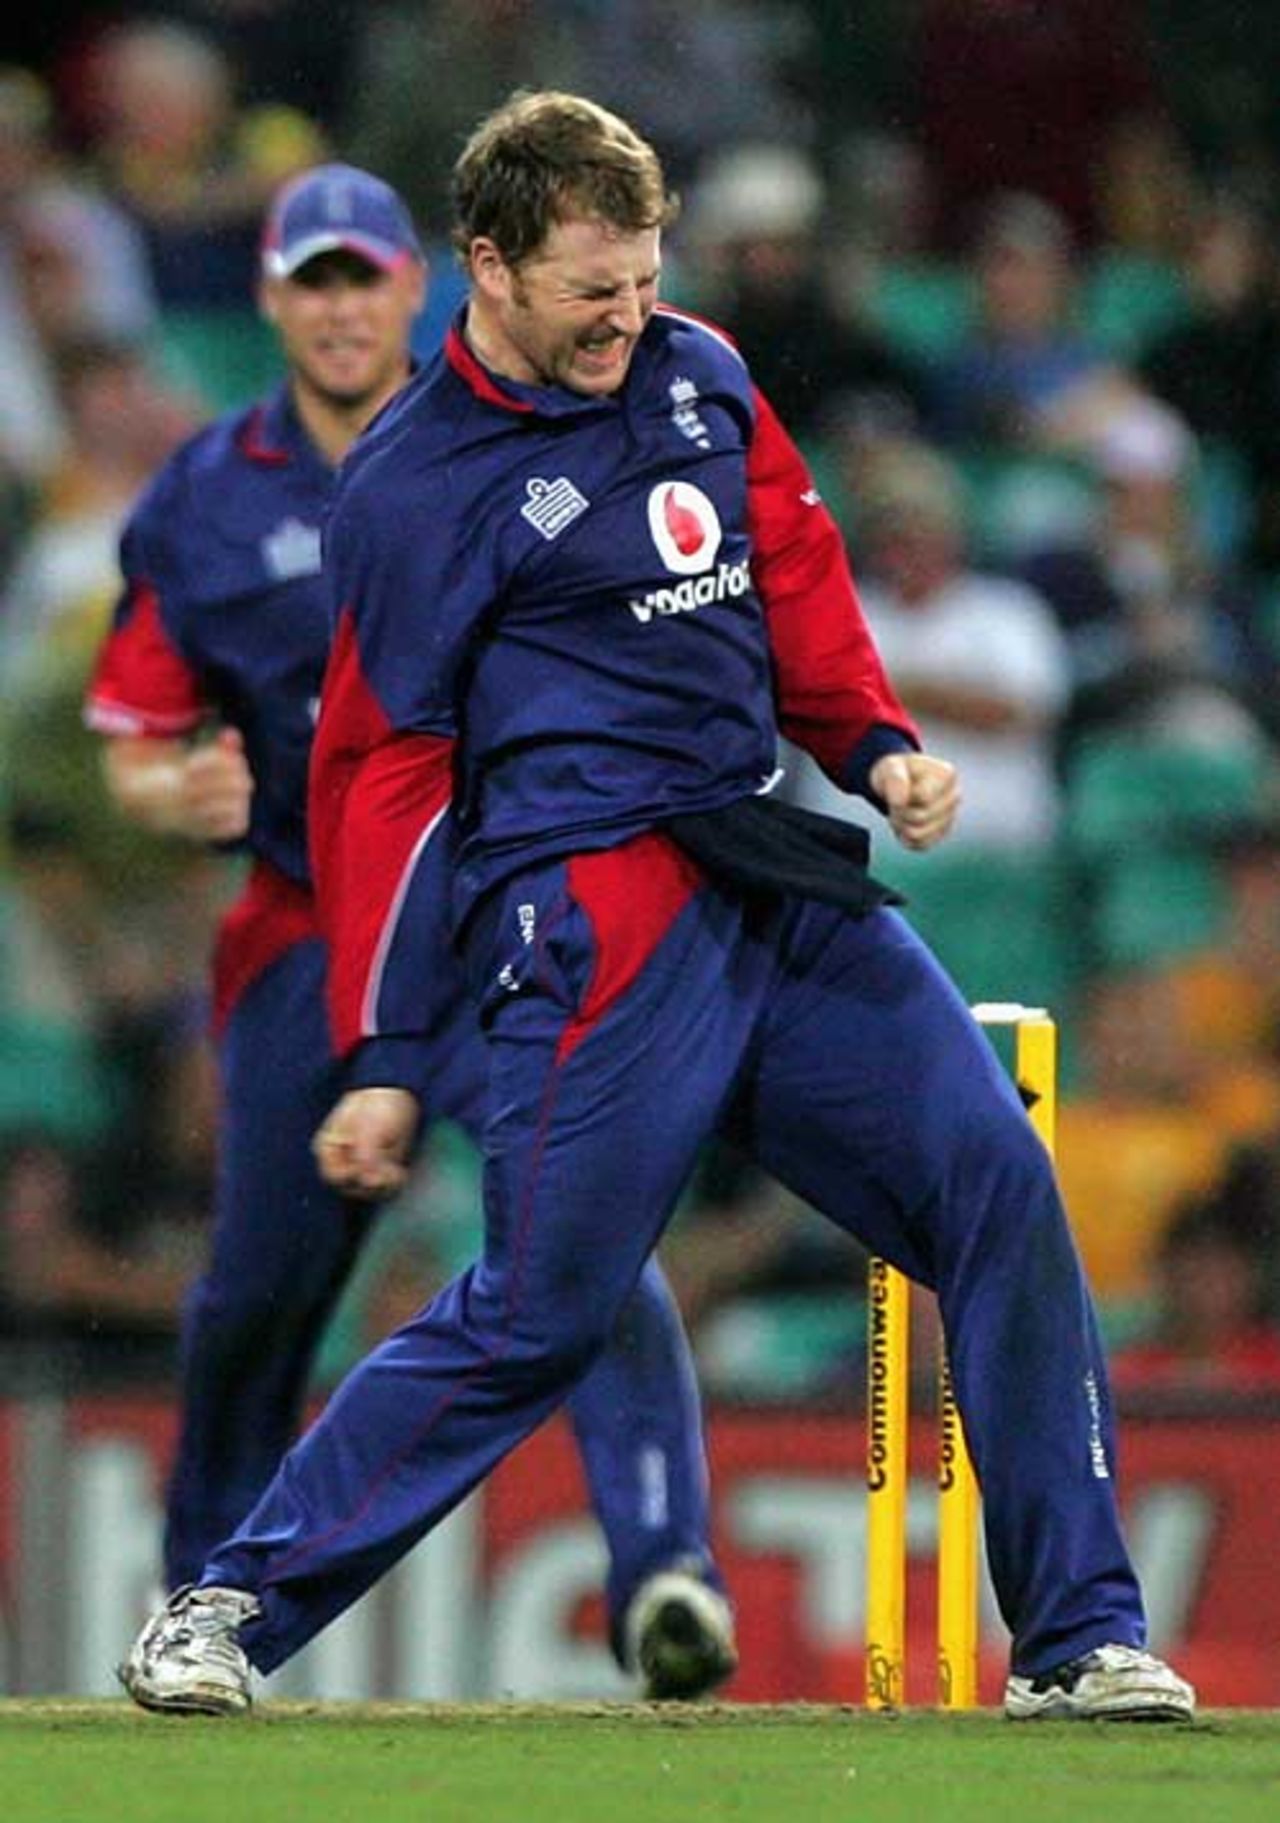 Jamie Dalrymple celebrates Brad Hodge's wicket, Australia v England, CB Series, 2nd final, Sydney, February 11, 2007